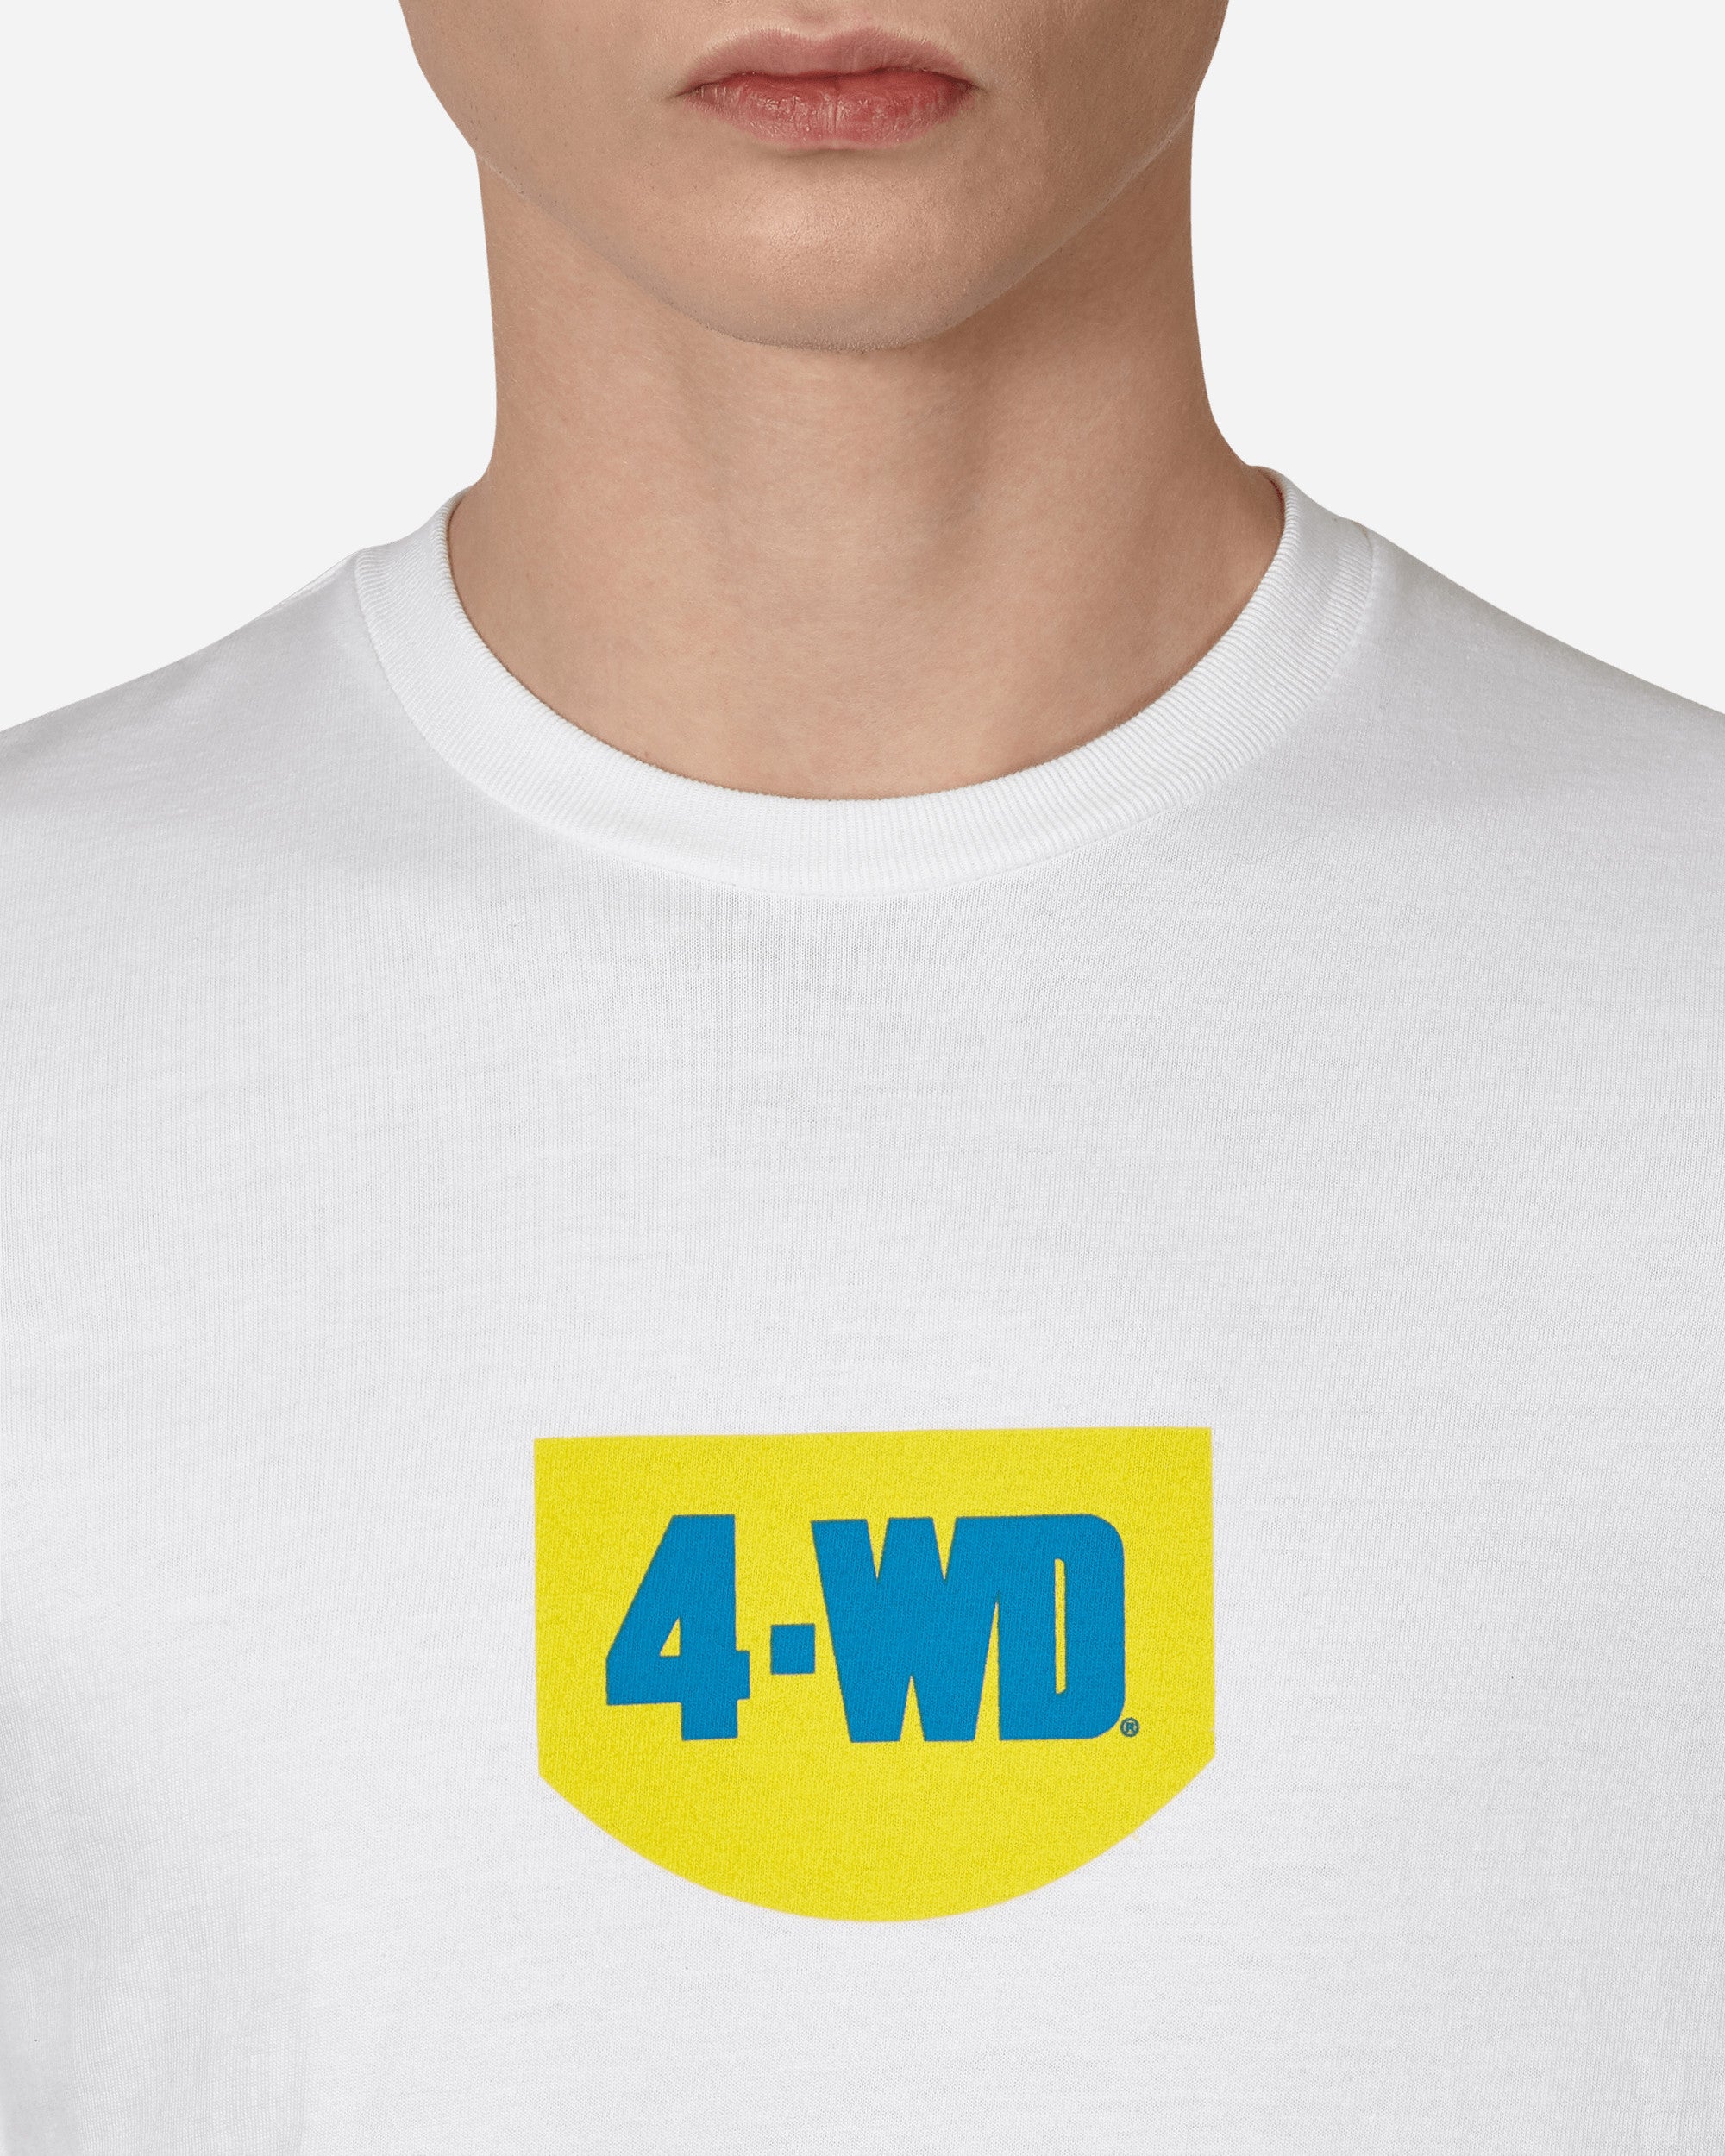 4 Worth Doing 4-Wd Company T-Shirt White Shirts Shortsleeve 4WDF22T1 WHITE